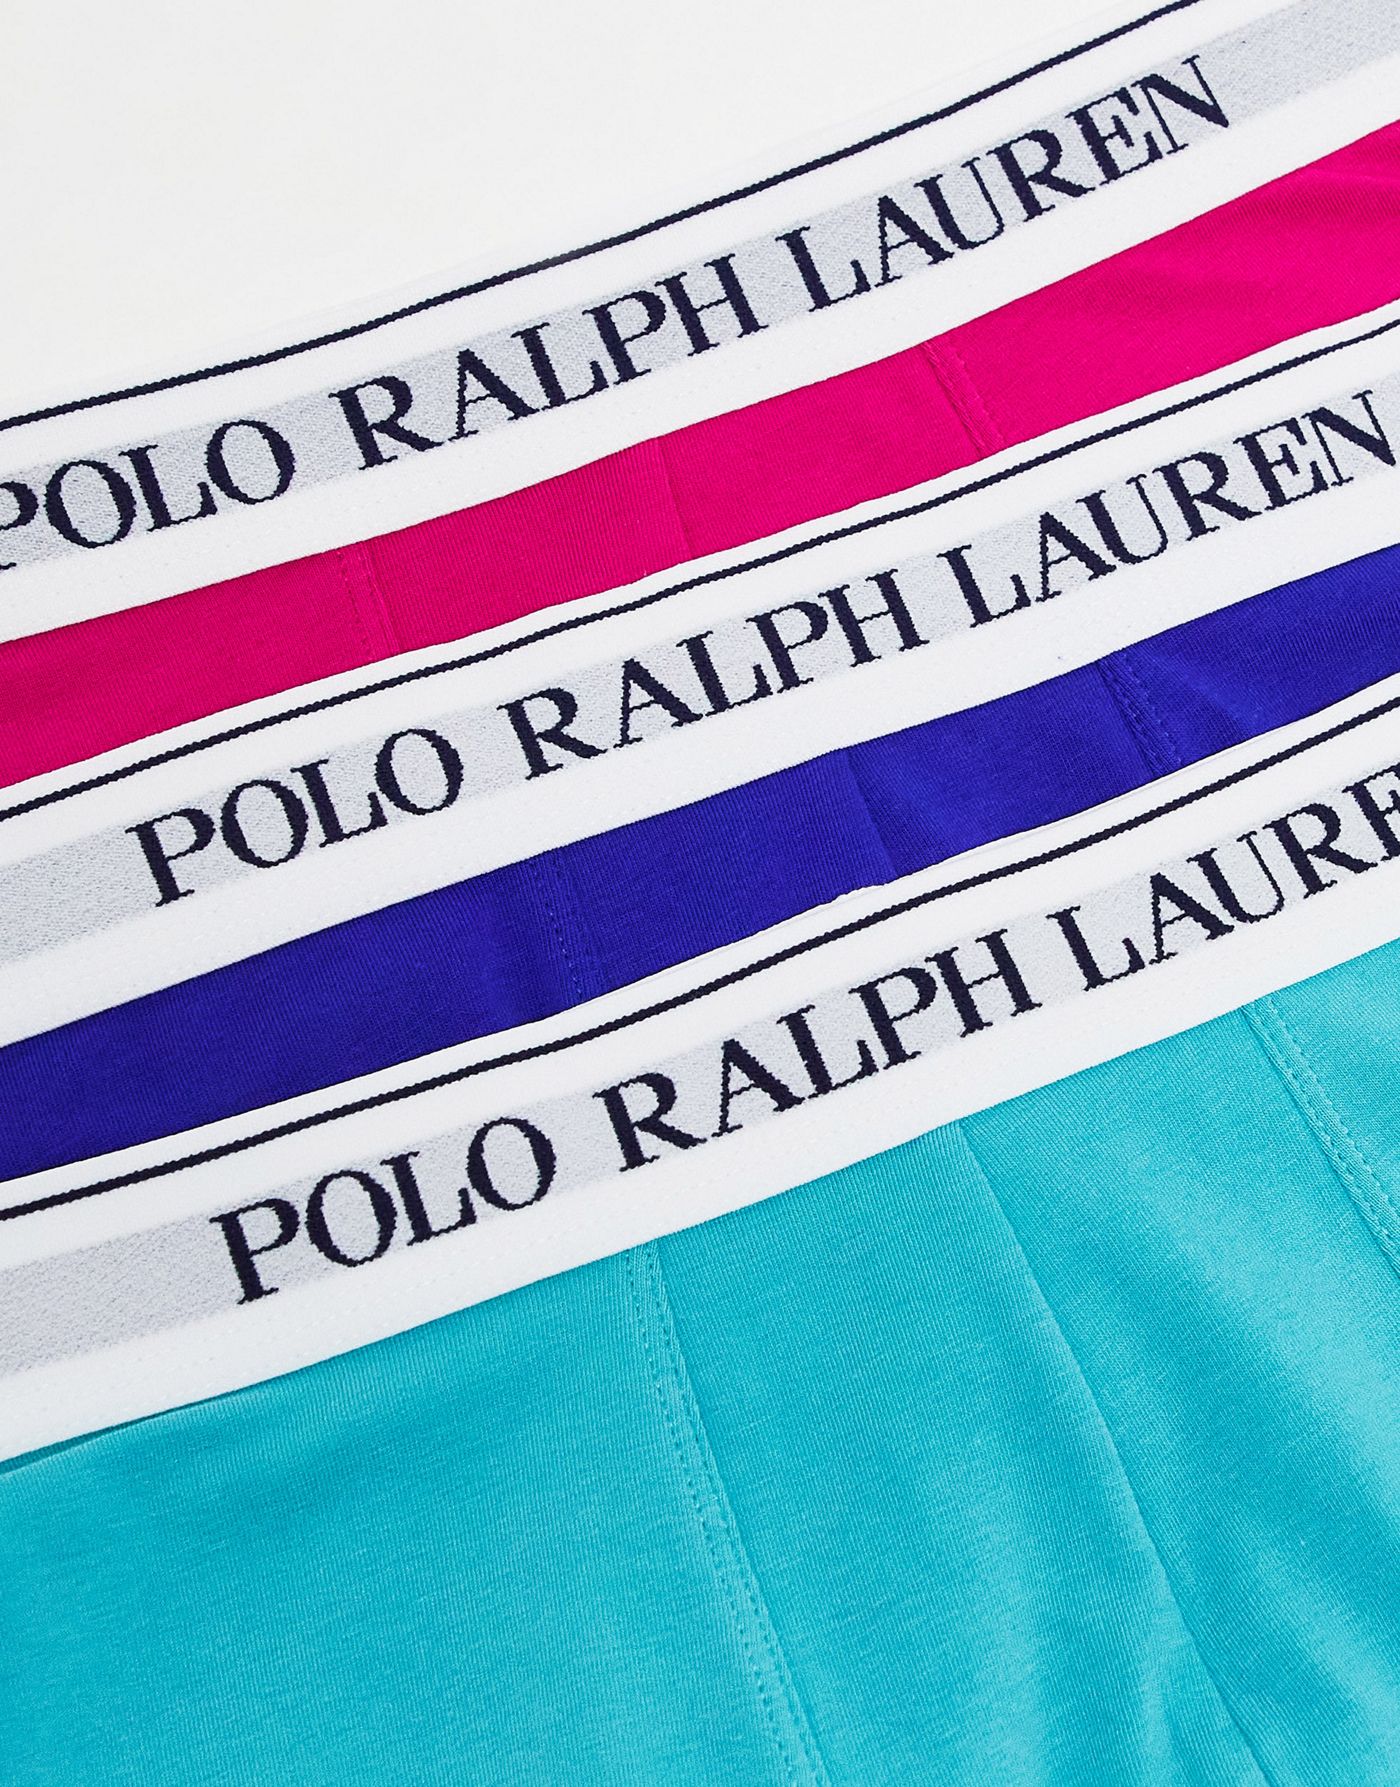 Polo Ralph Lauren 3 pack trunks pink blue purple with logo waistband